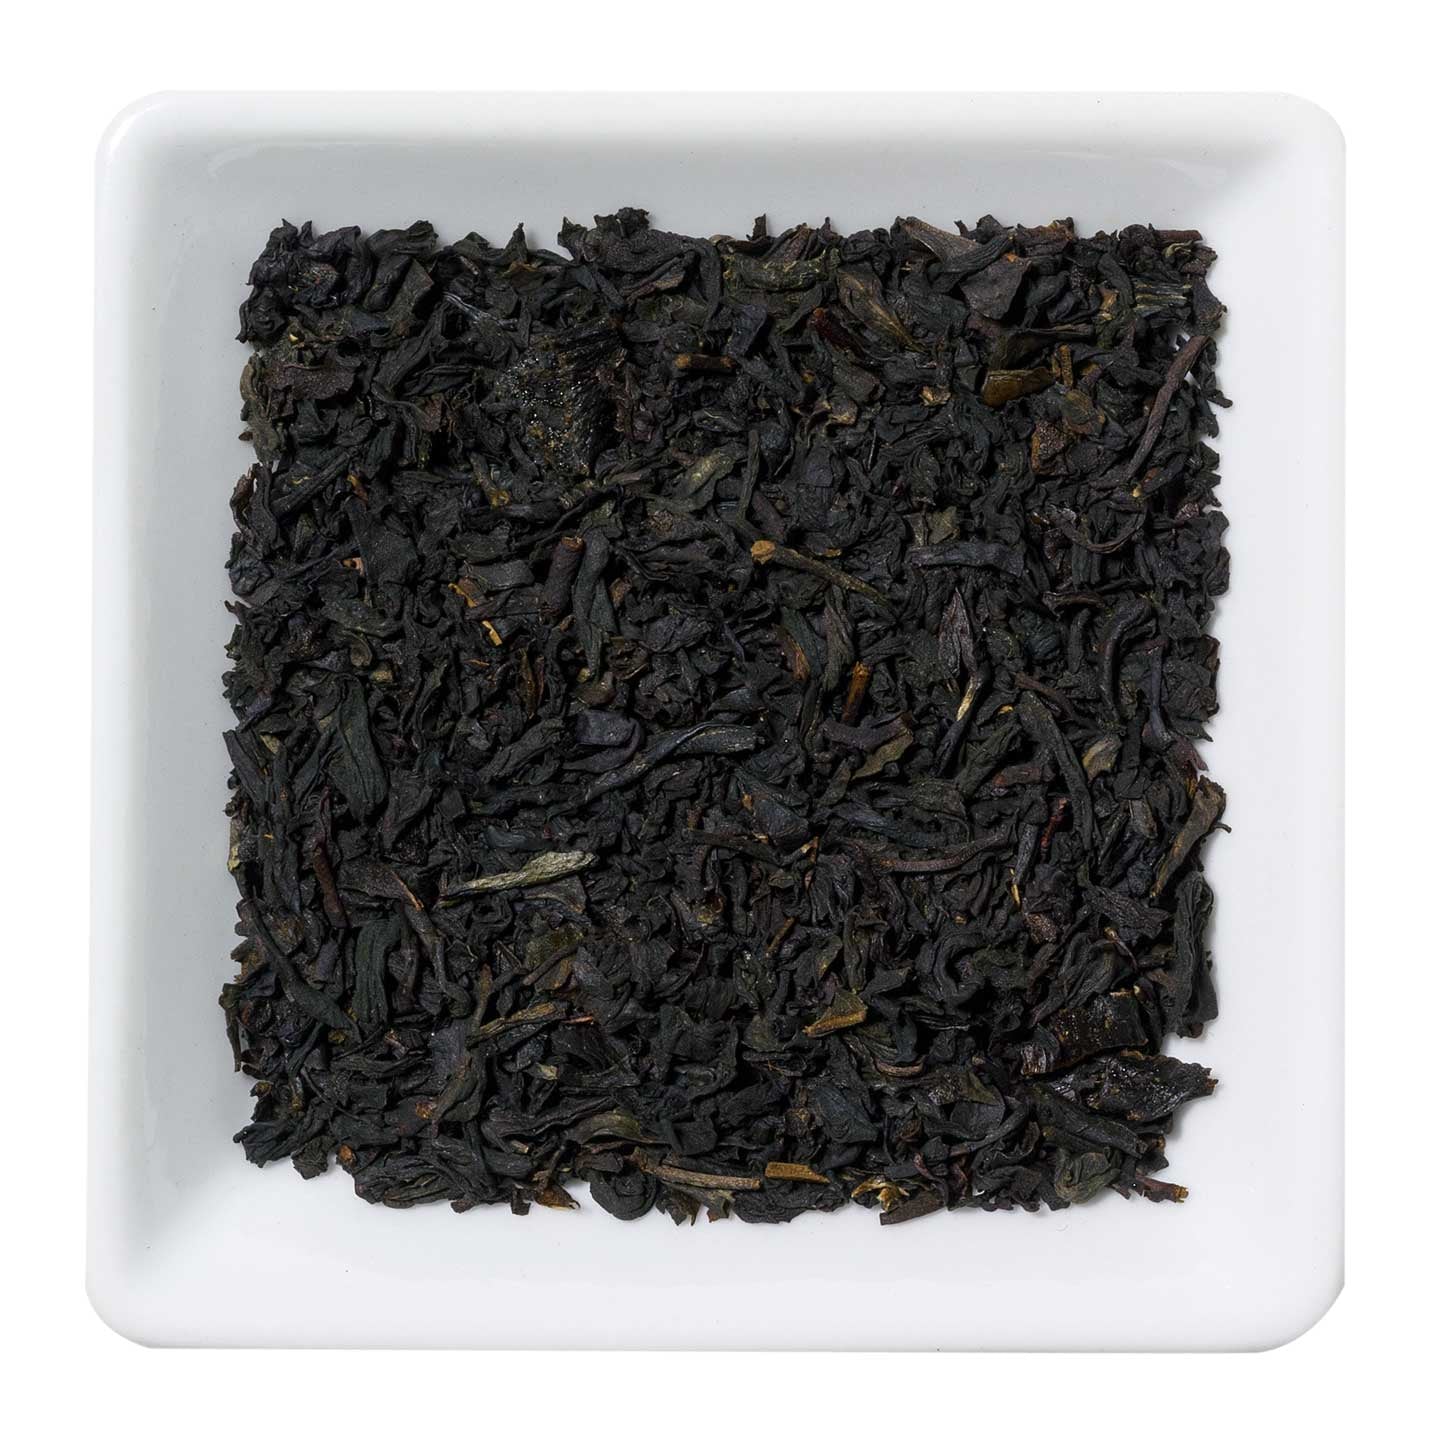 Vanilla Flavoured Black Tea